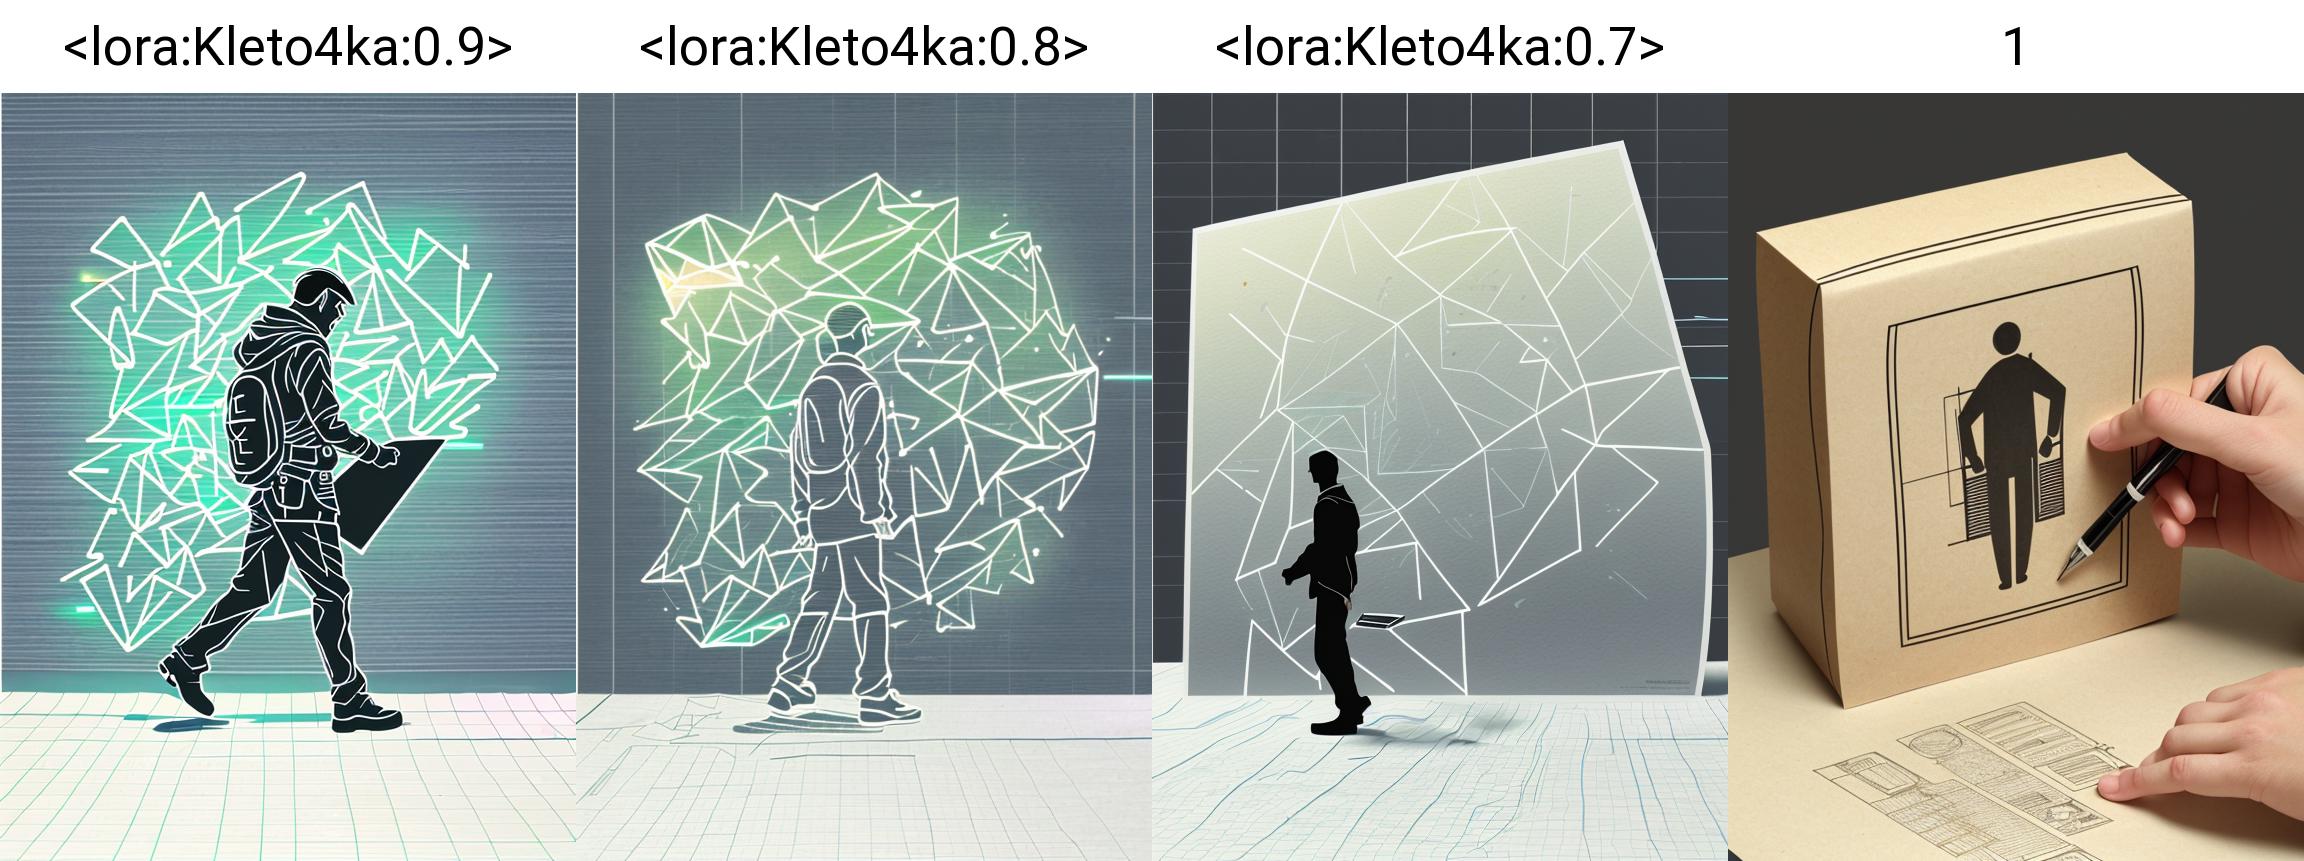 AI model image by Kotoshko